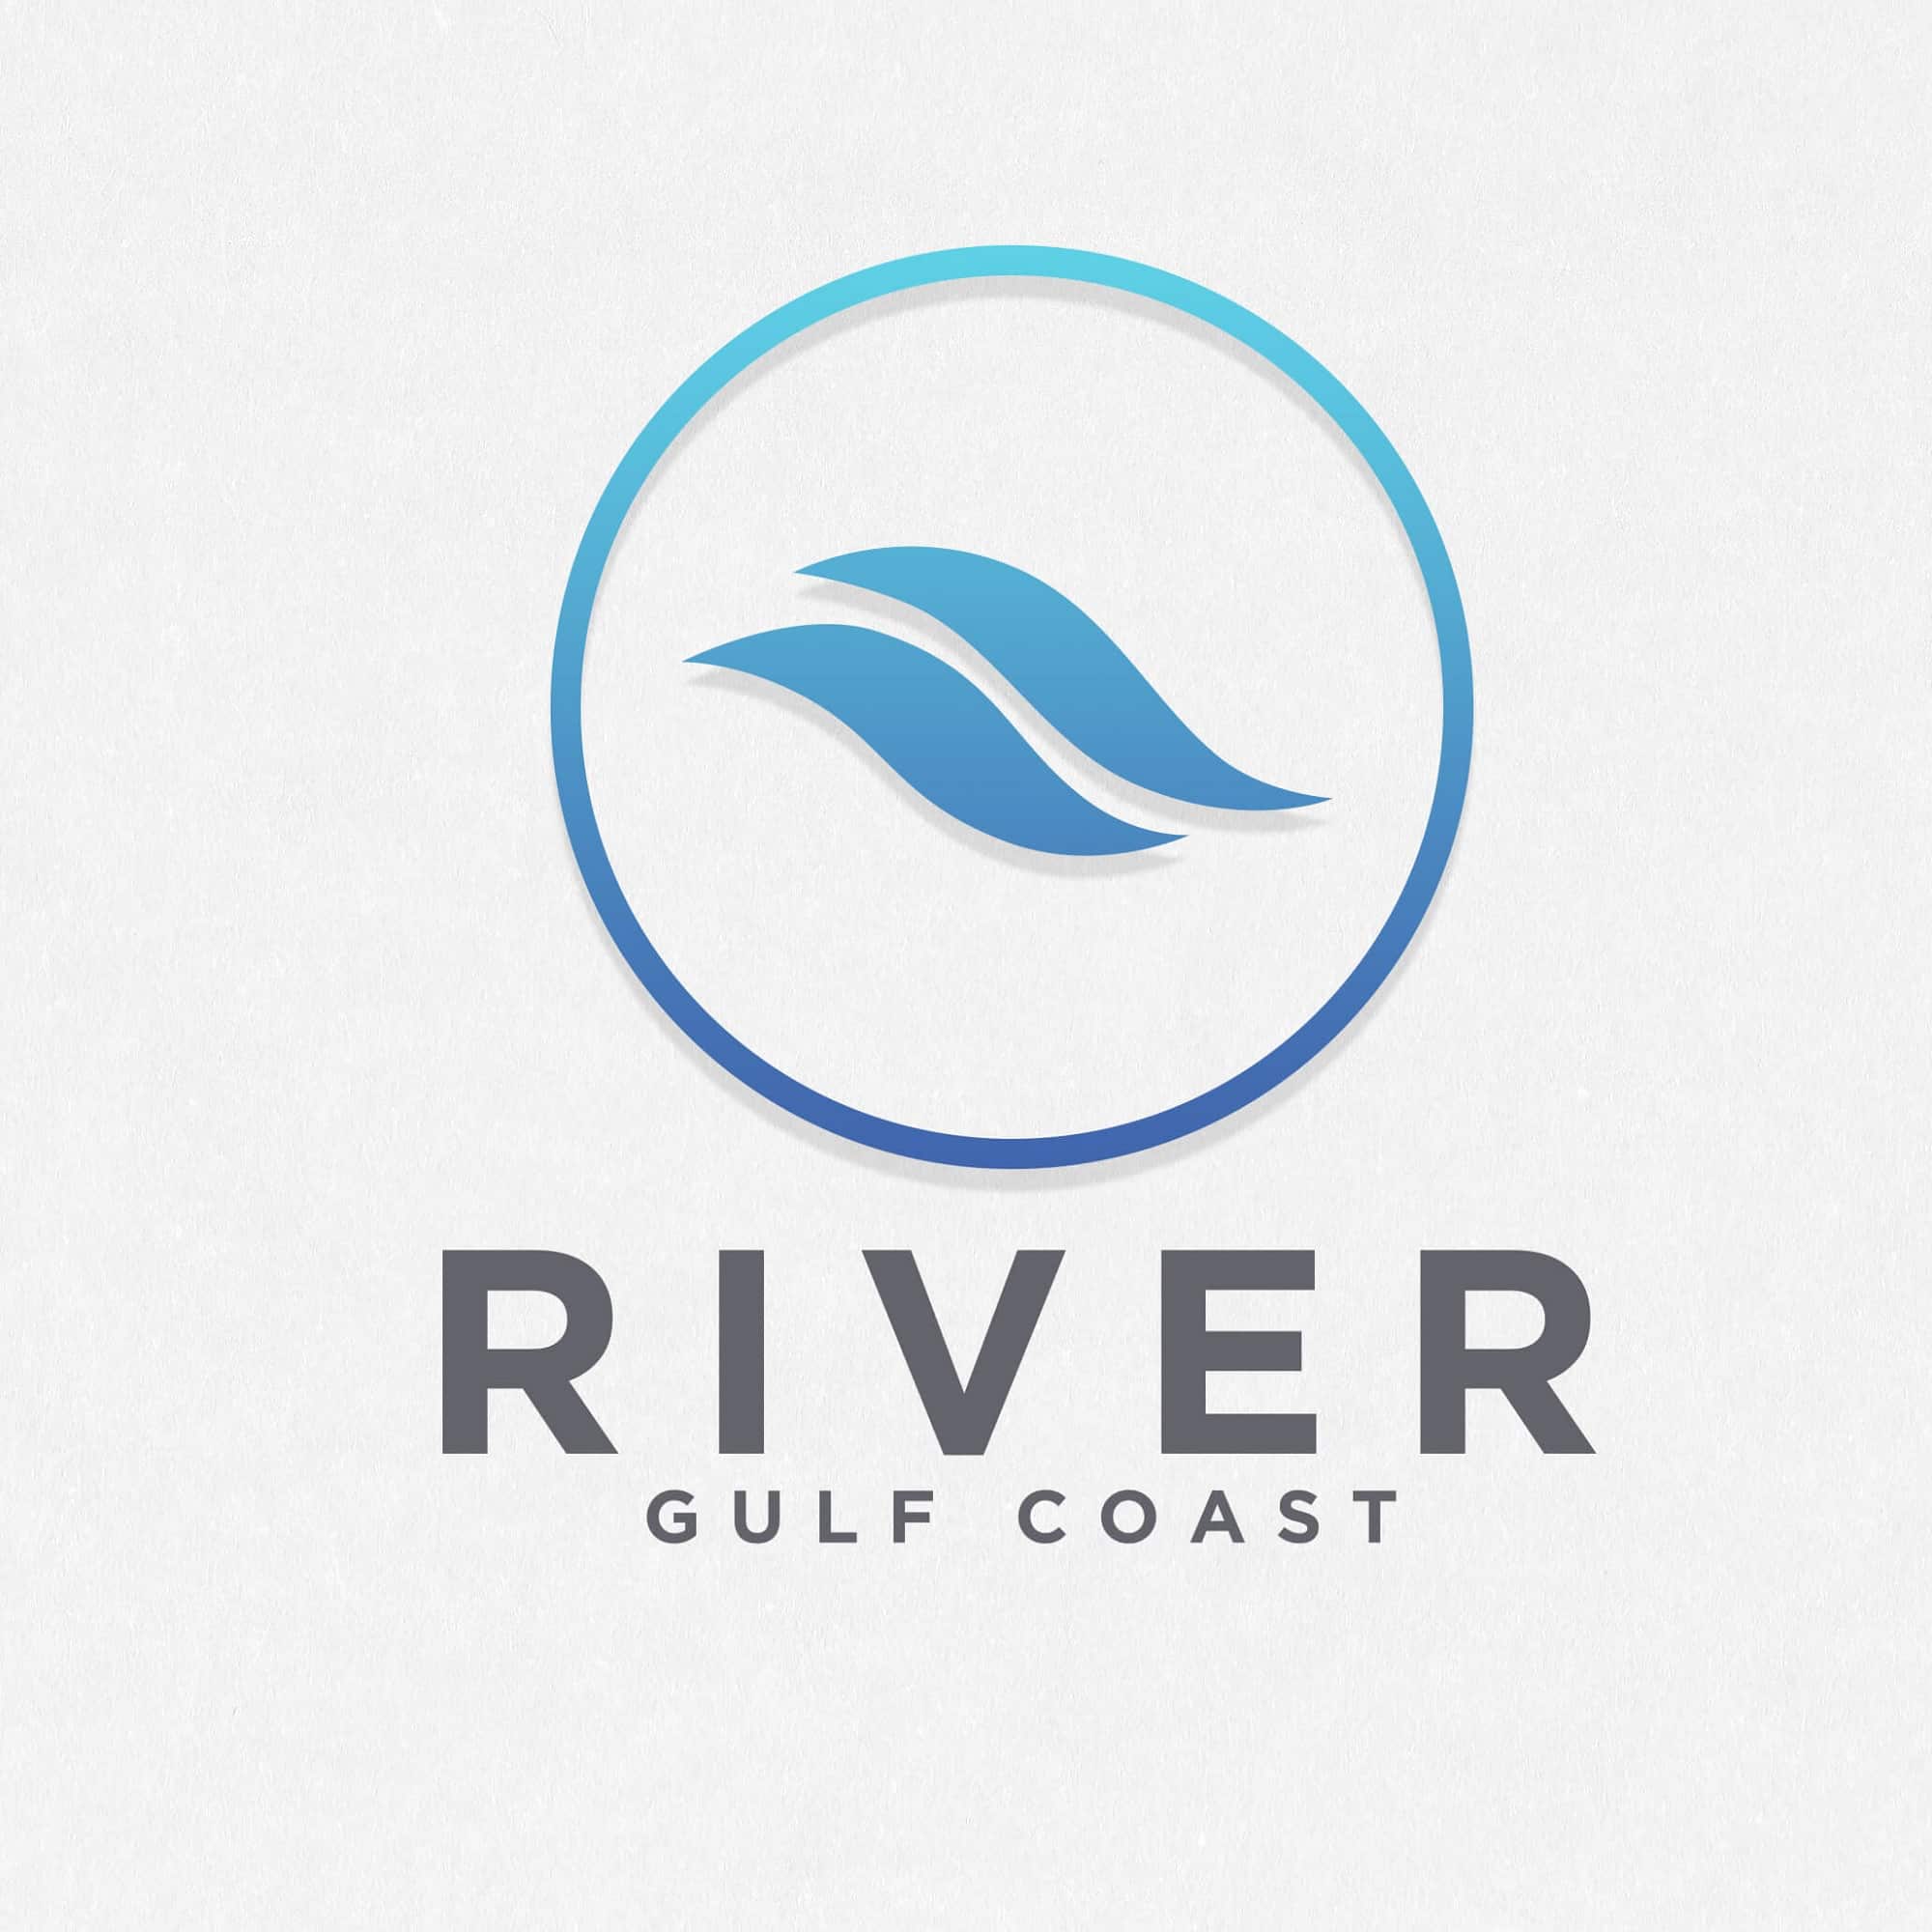 River Gulf Coast